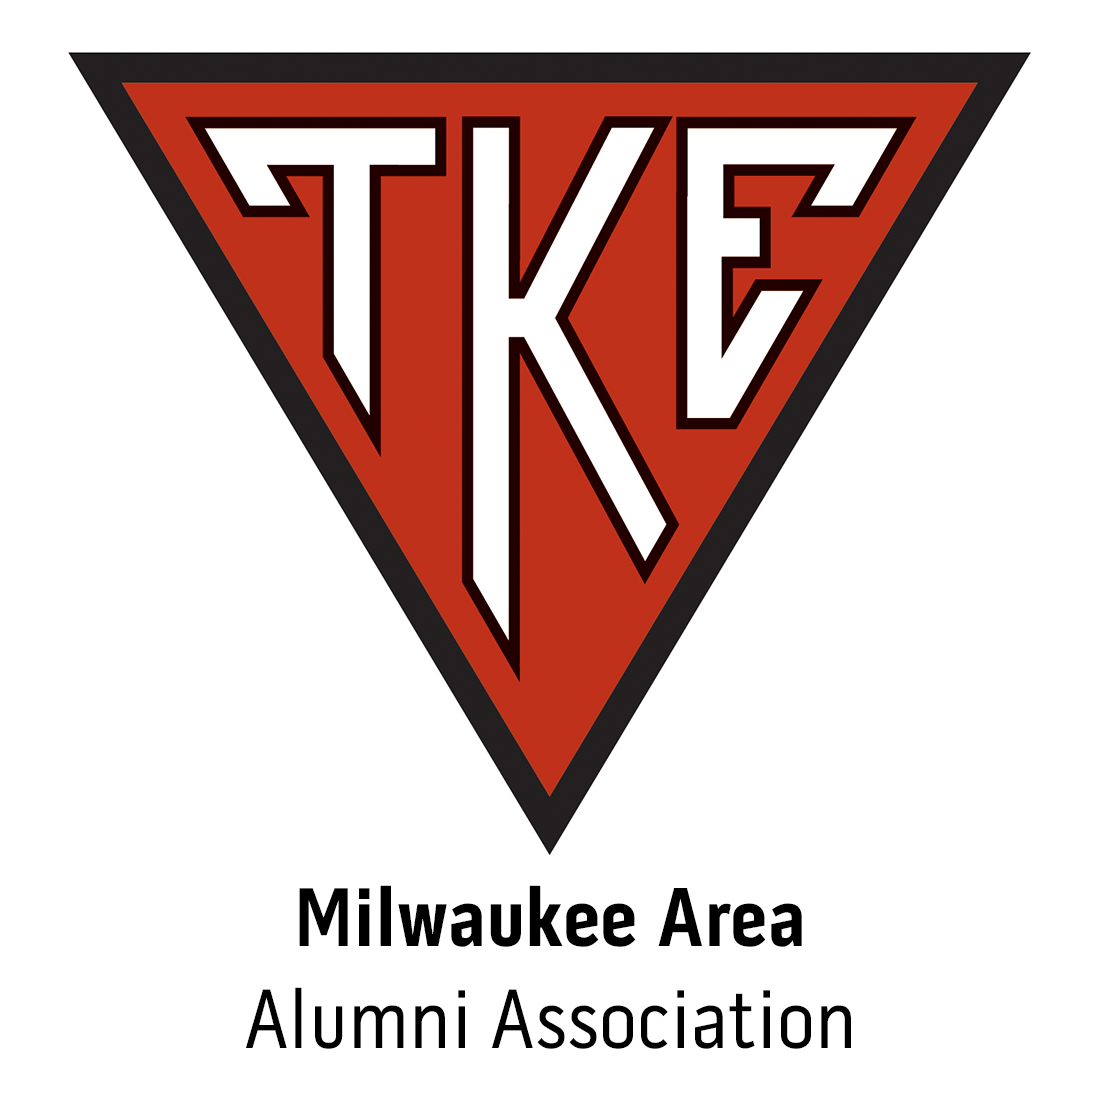 Milwaukee Area Alumni Association at Milwaukee, WI